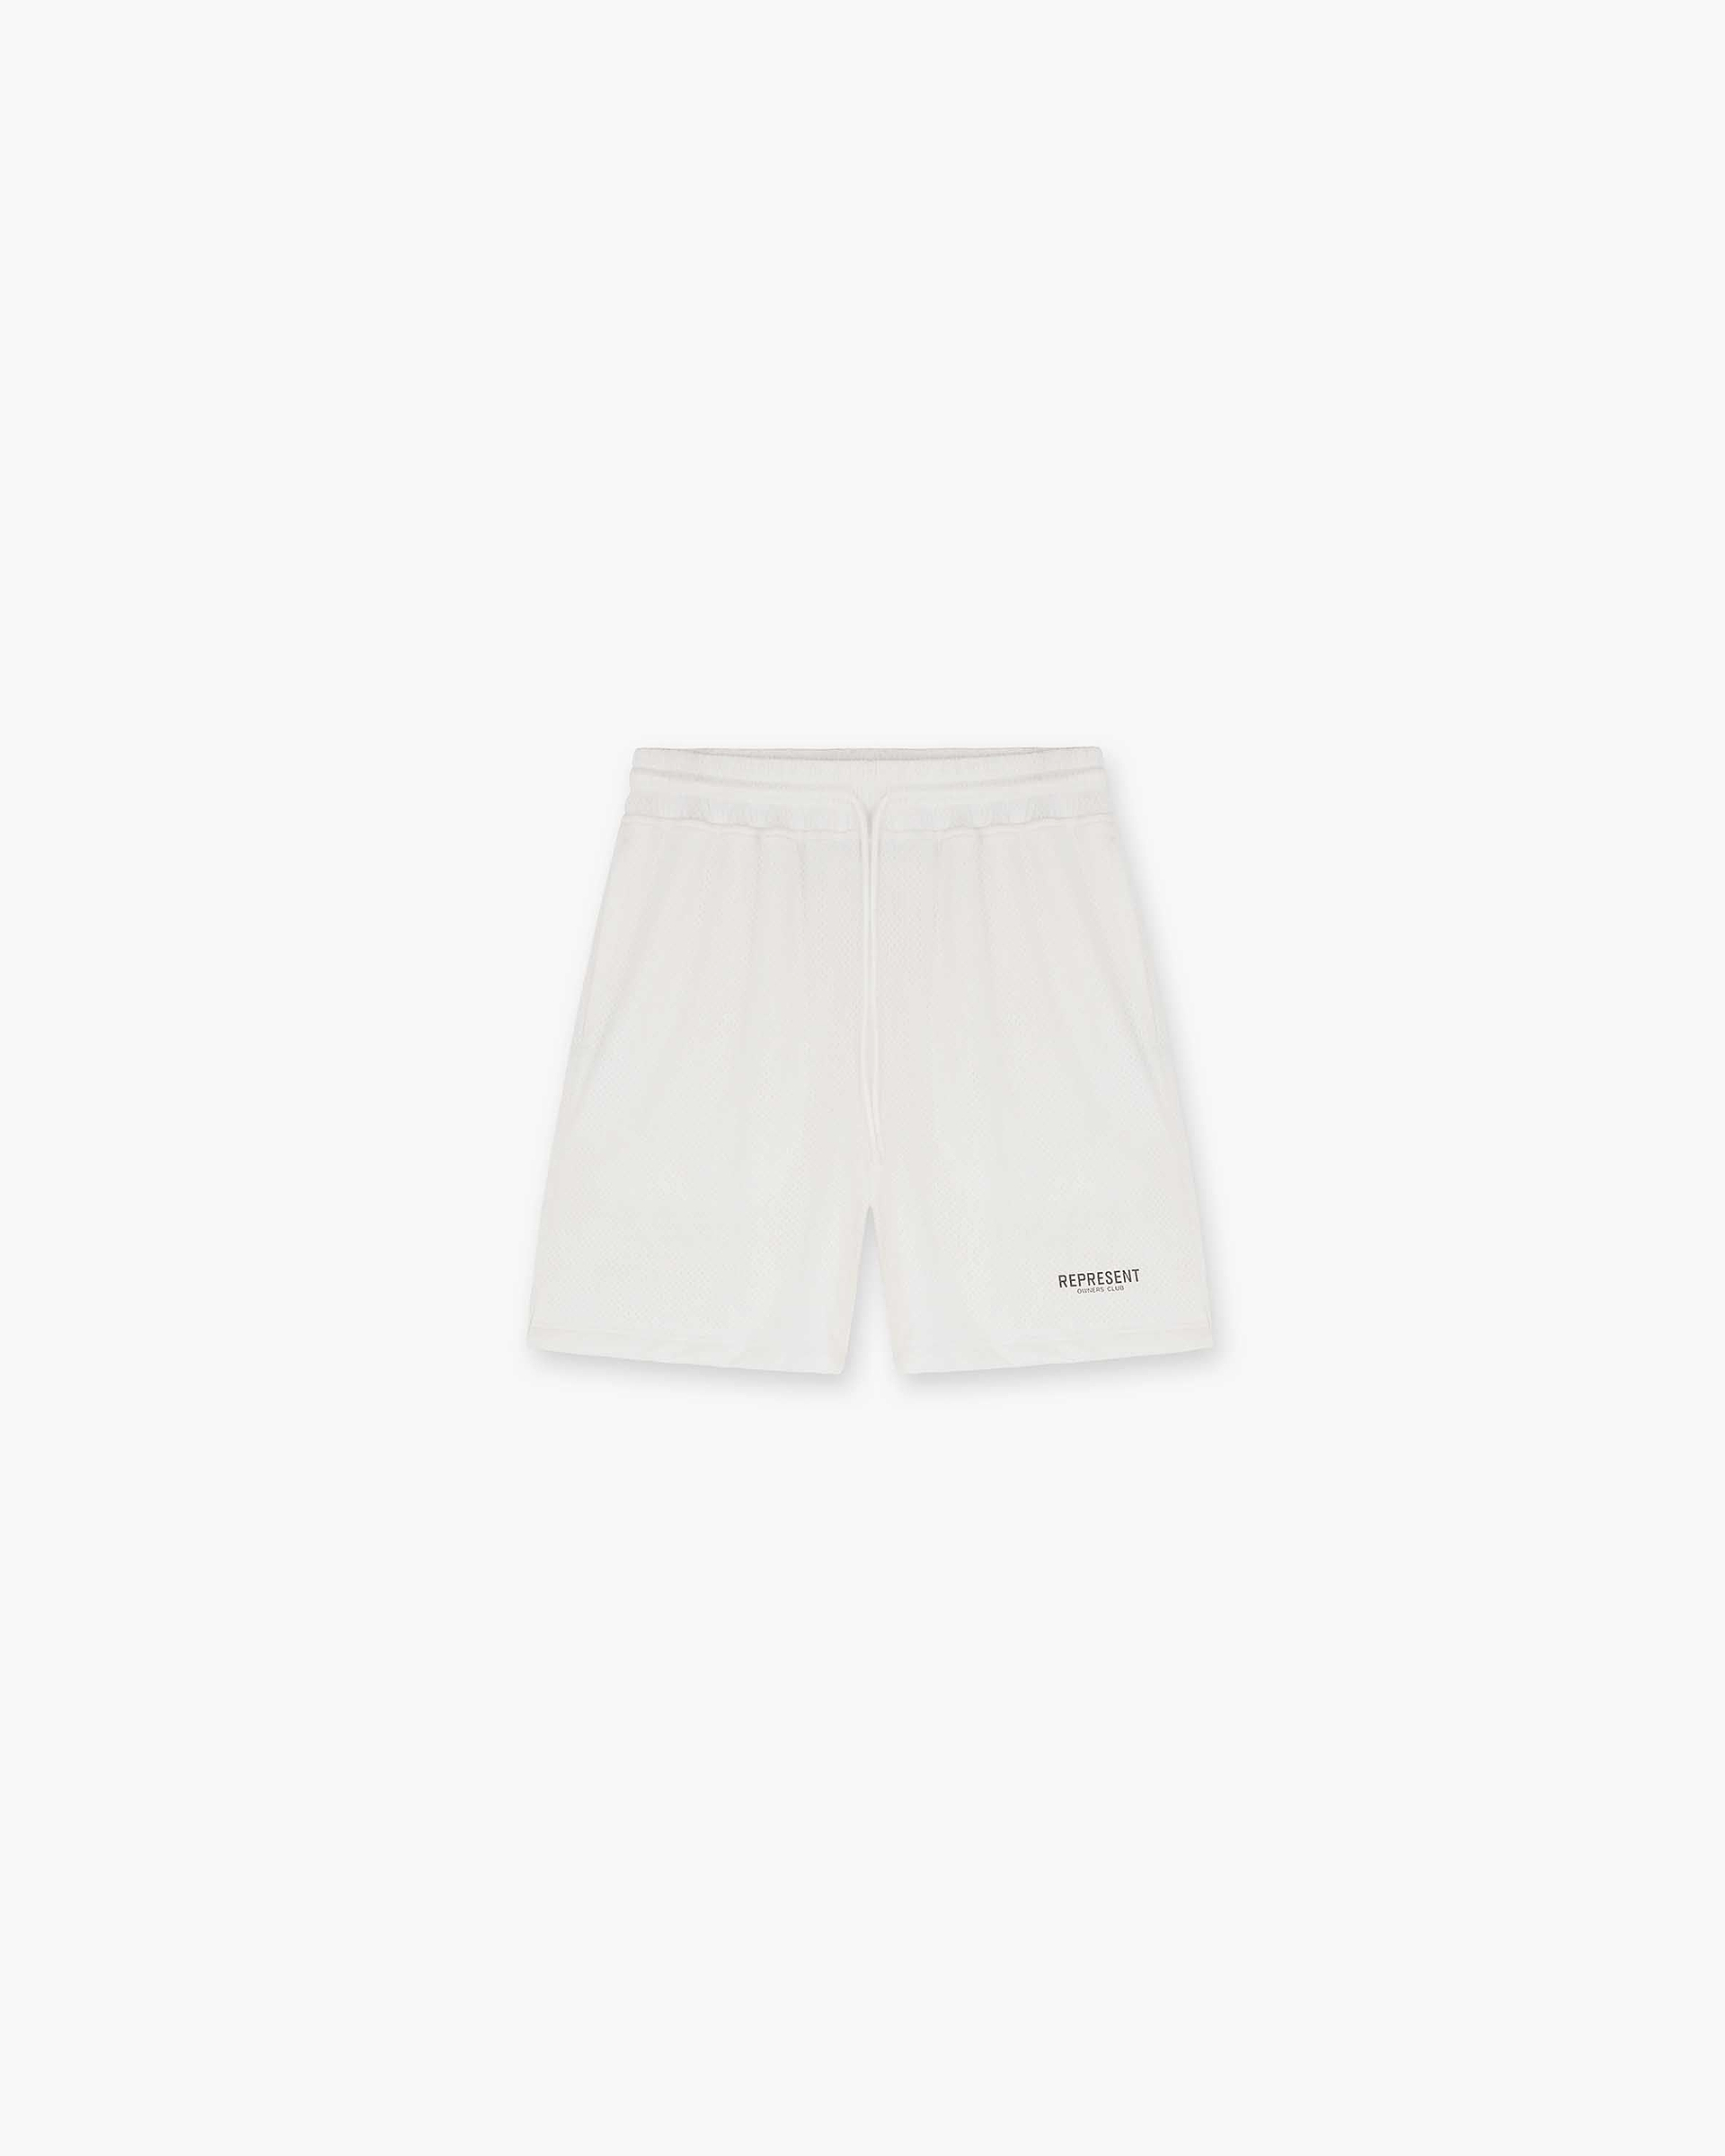 Represent Owners Club Mesh Shorts | Flat White Shorts | REPRESENT CLO